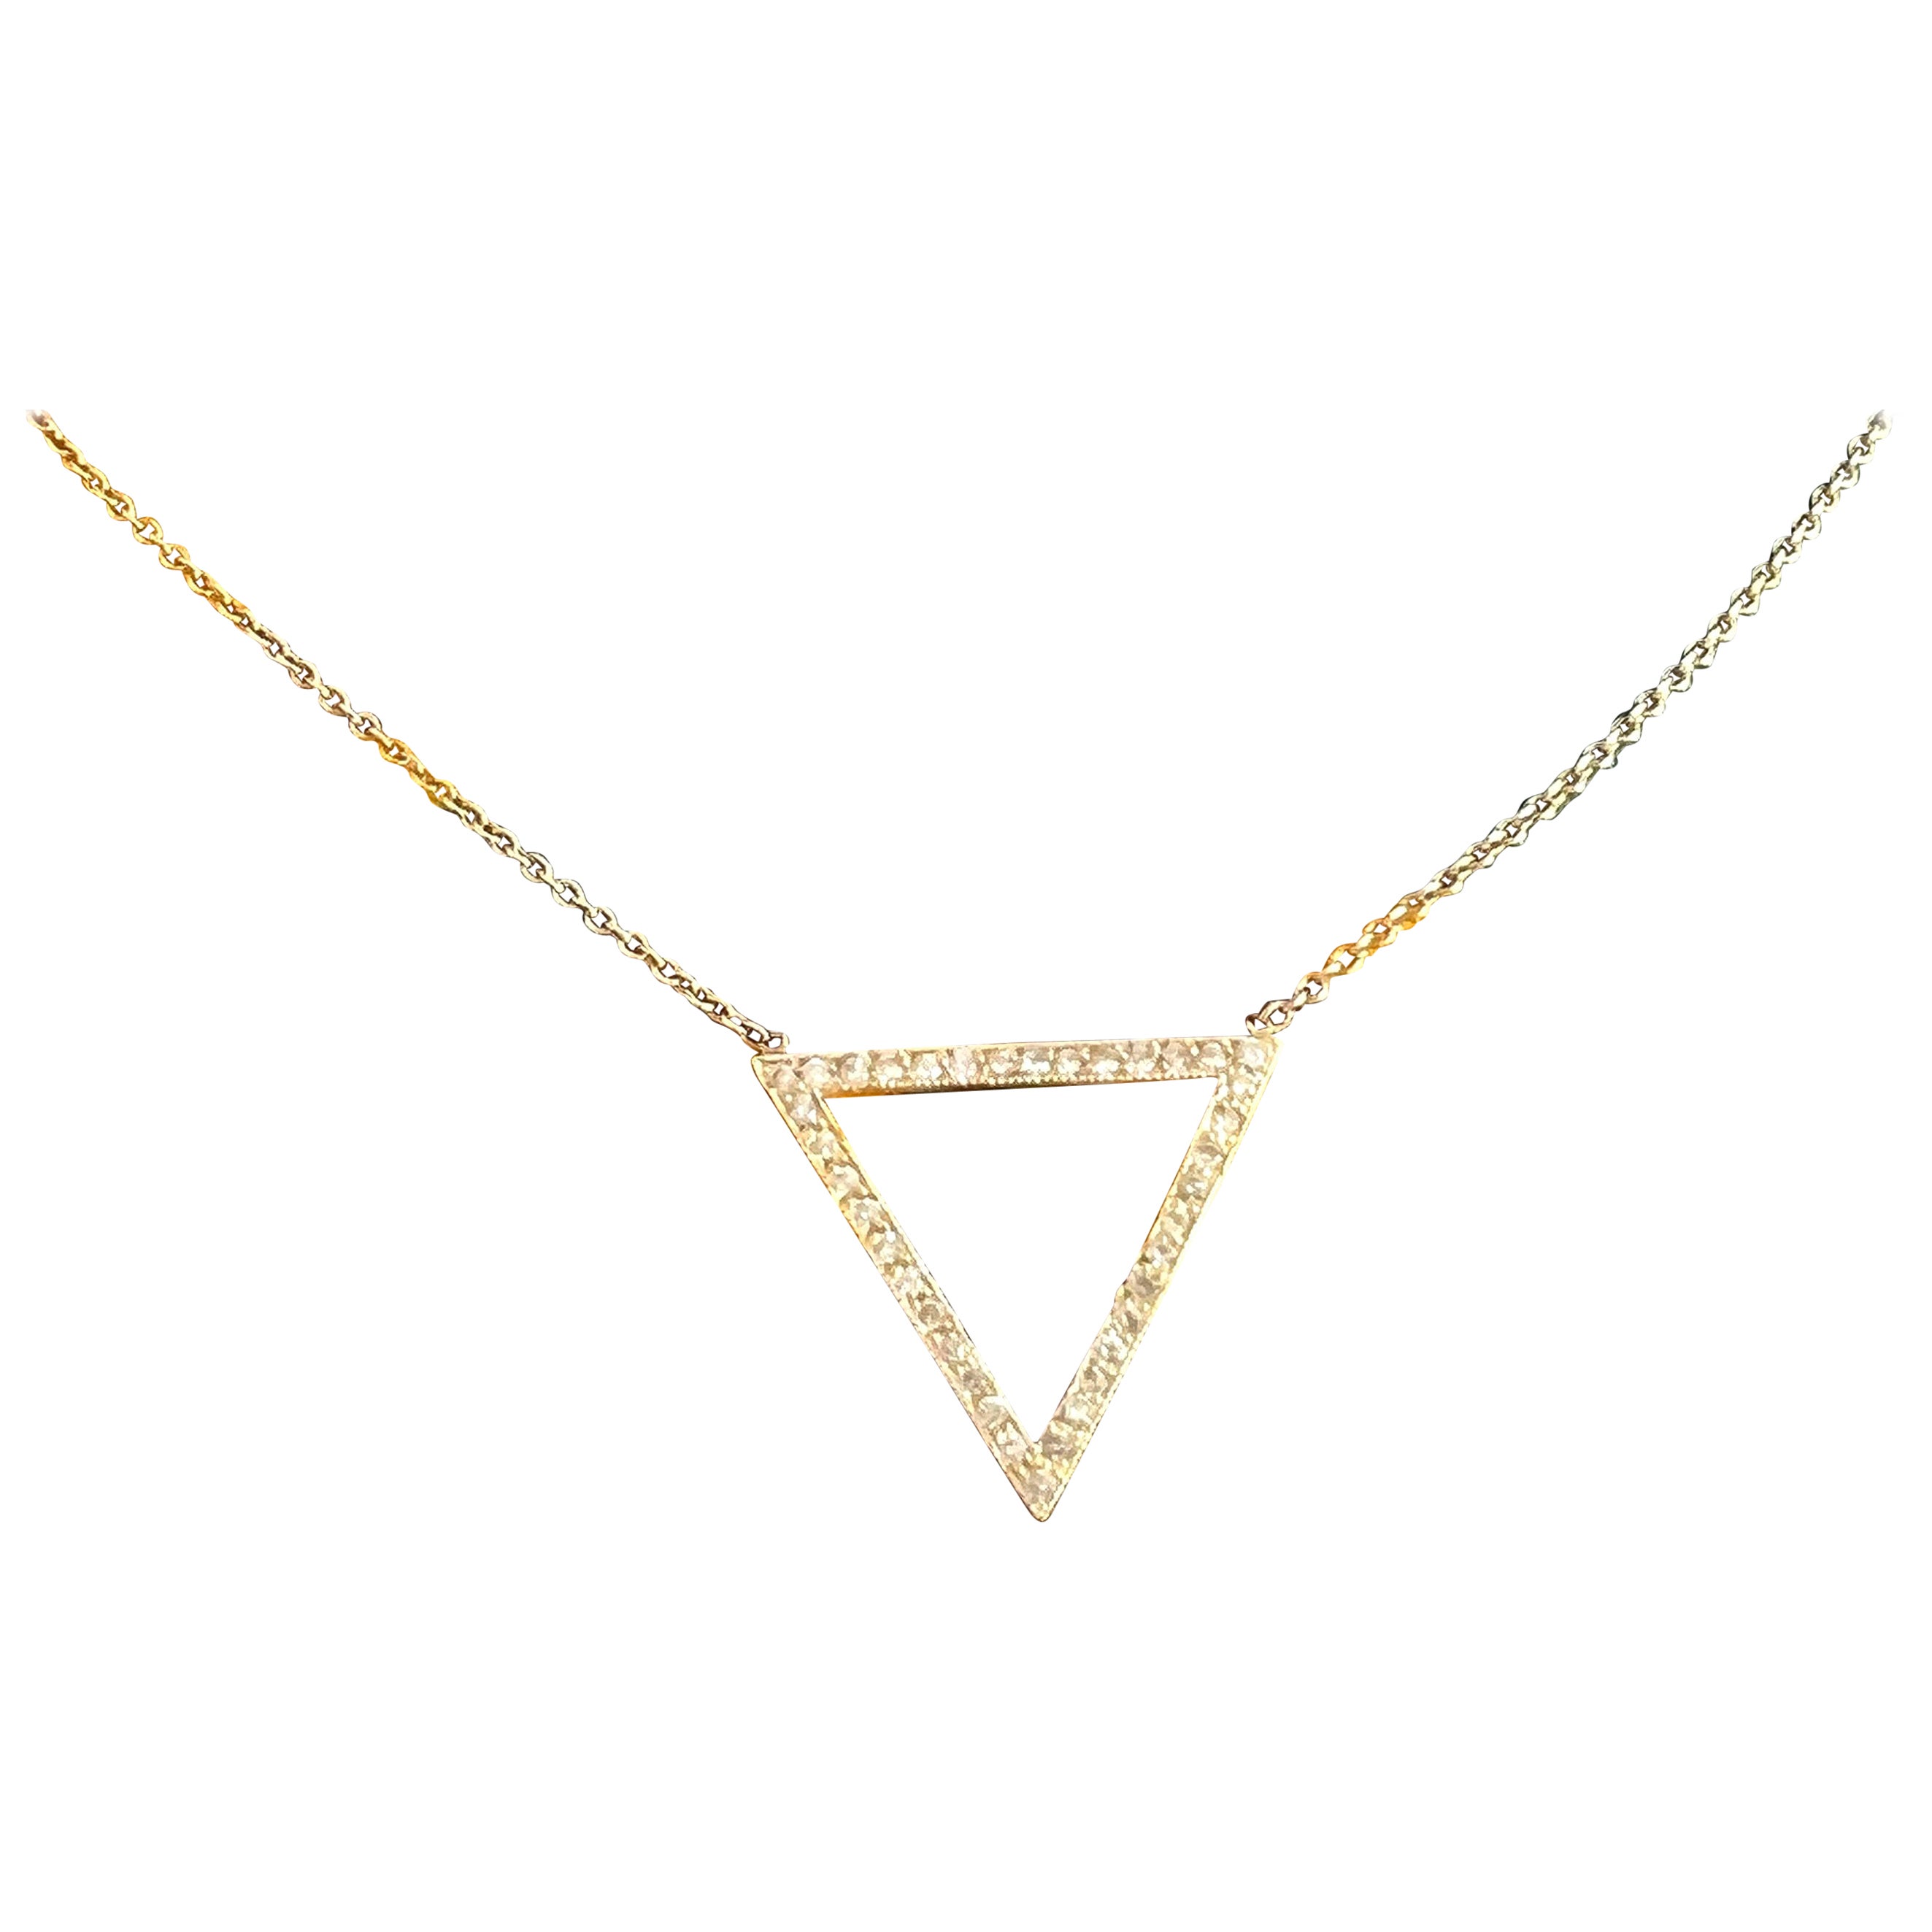 Zoe Chicco 14k Yellow Gold Diamond Triangle Pendant Station Necklace